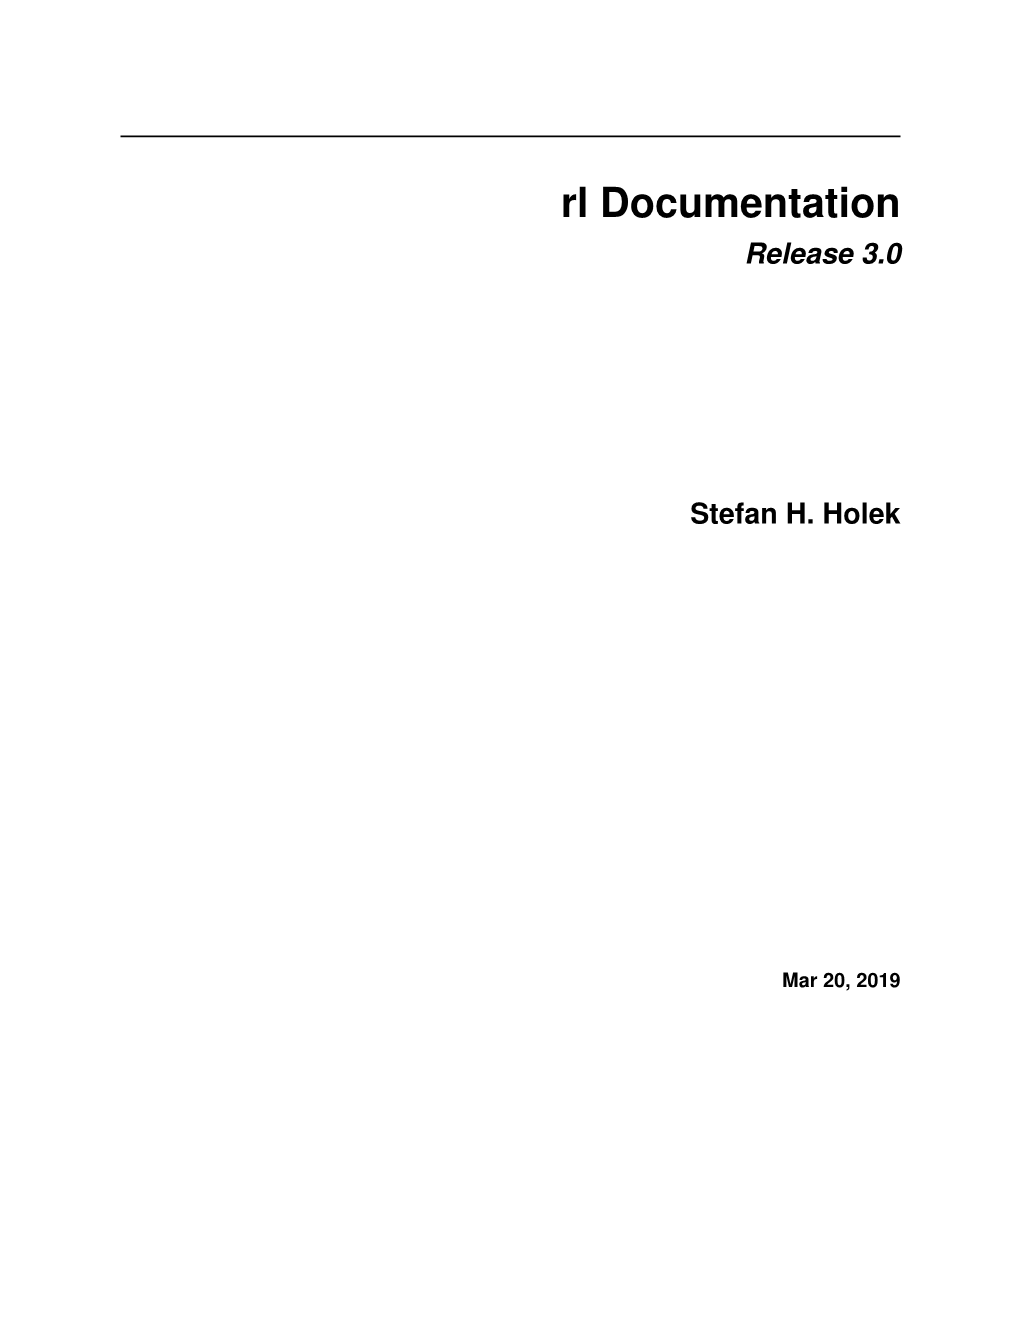 Rl Documentation Release 3.0